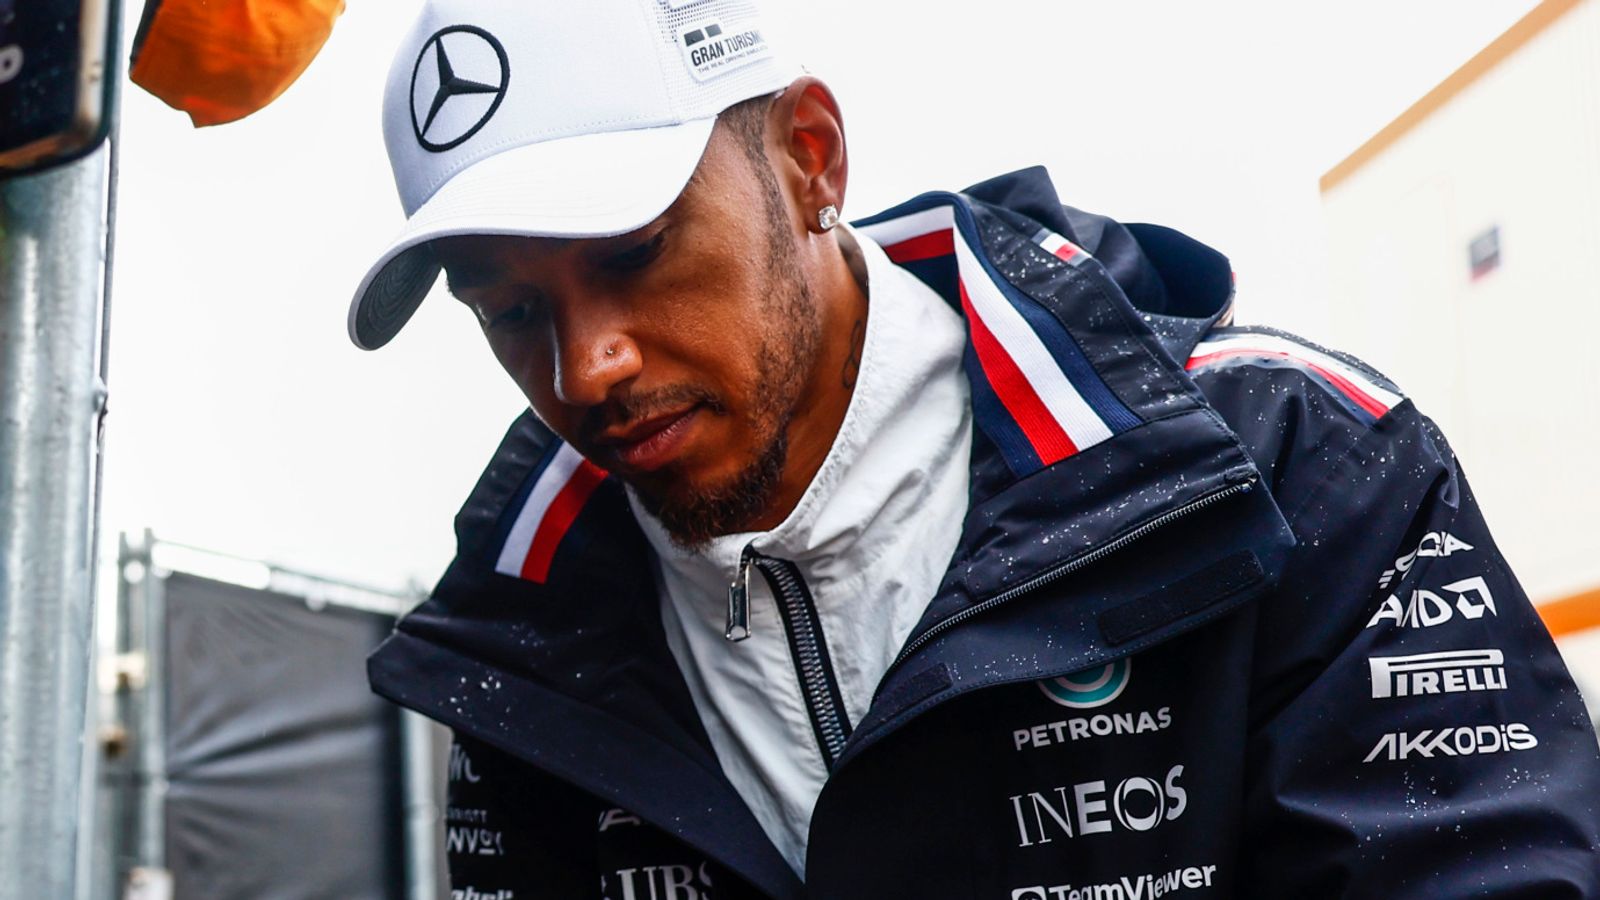 Lewis Hamilton: Yuki Tsunoda given Dutch GP grid penalty for blocking Mercedes driver in F1 qualifying